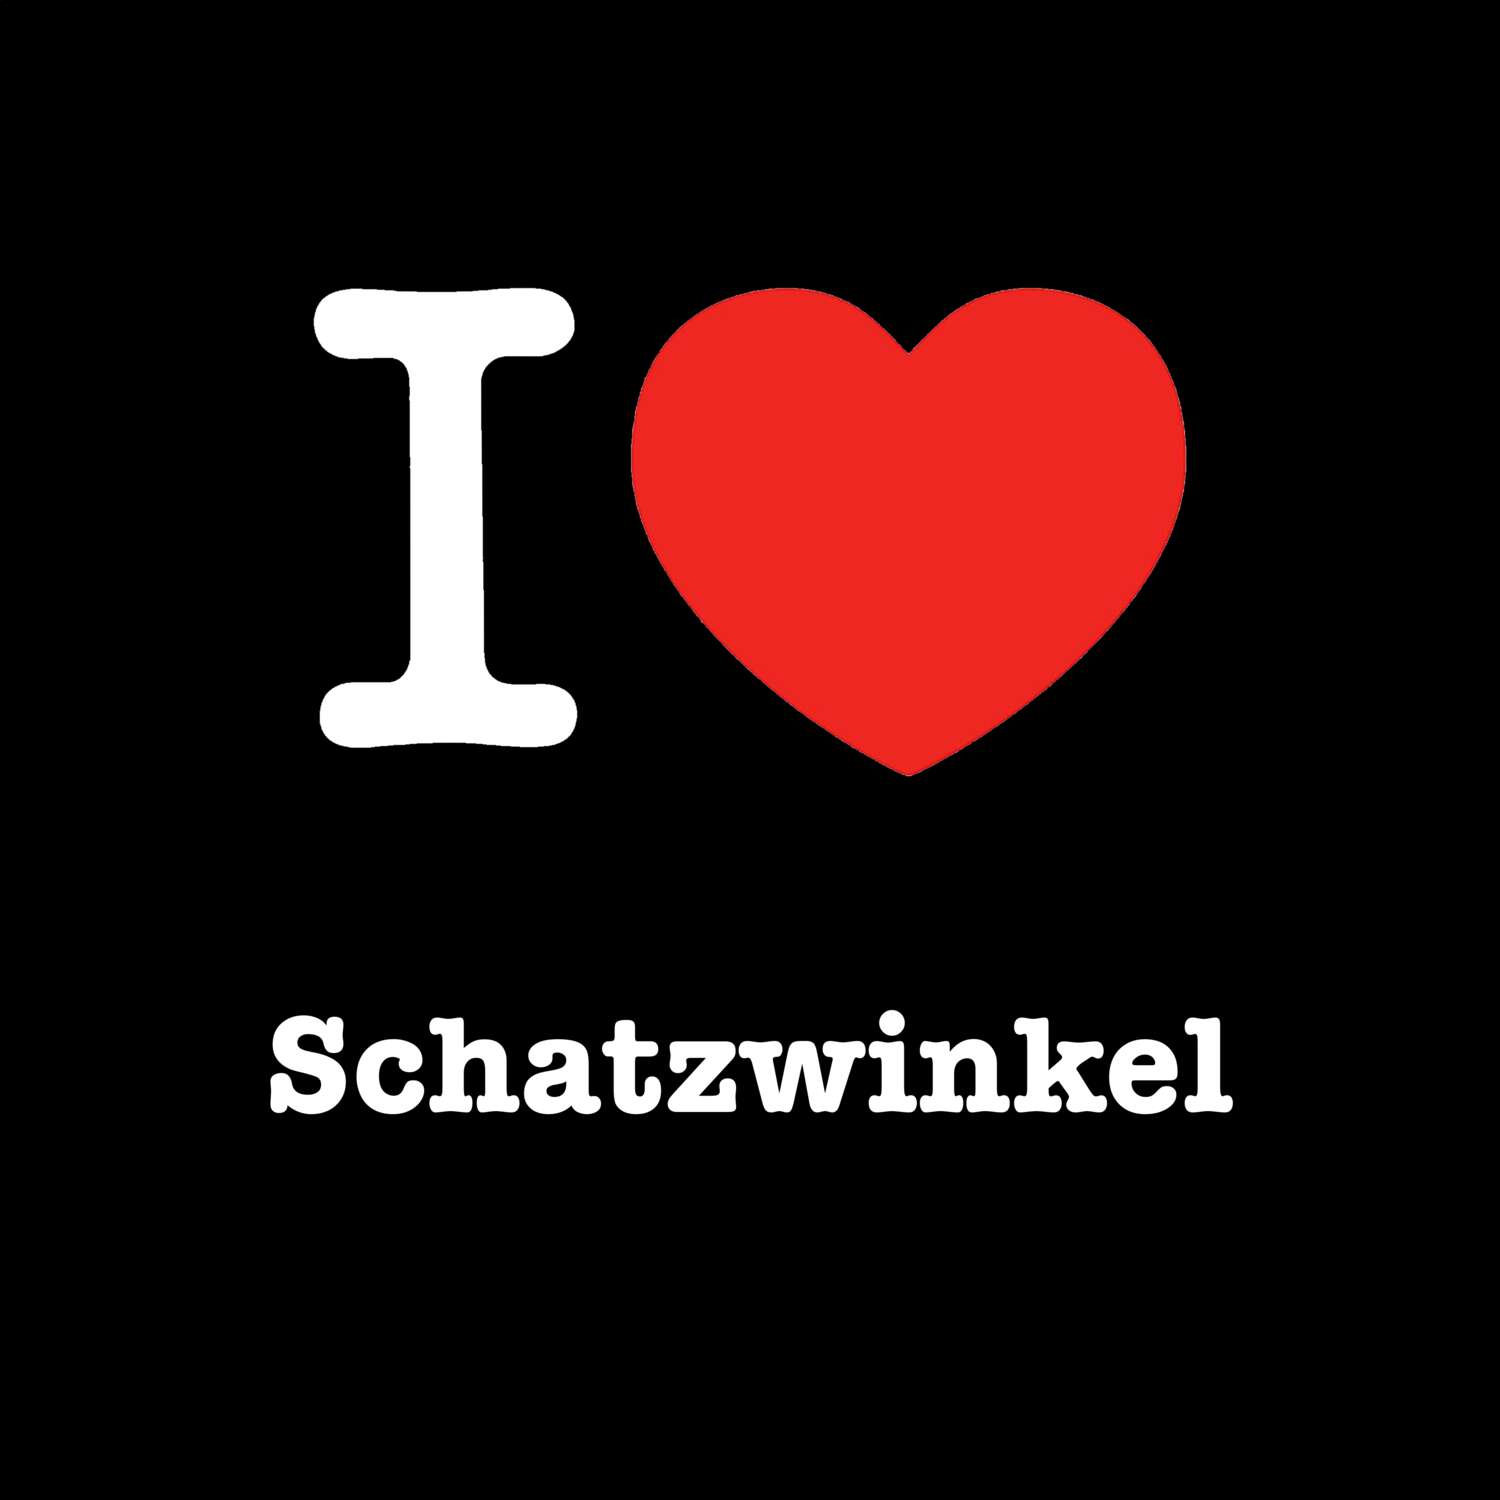 Schatzwinkel T-Shirt »I love«